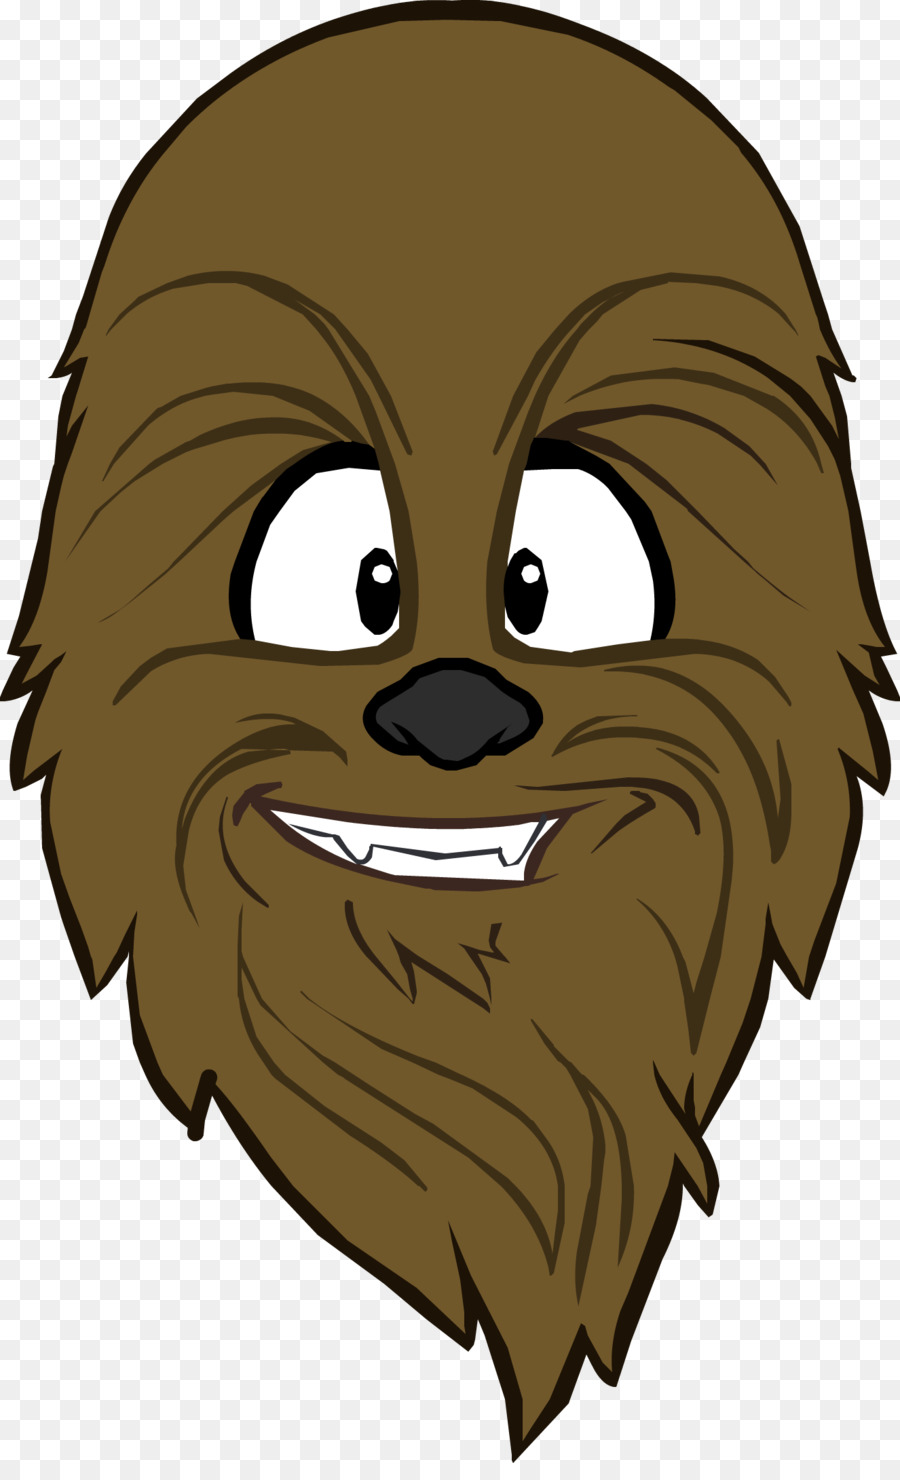 Chewbacca Wookiee Drawing Cartoon - yorkie png download - 1326*2155 - Free Transparent Chewbacca png Download.